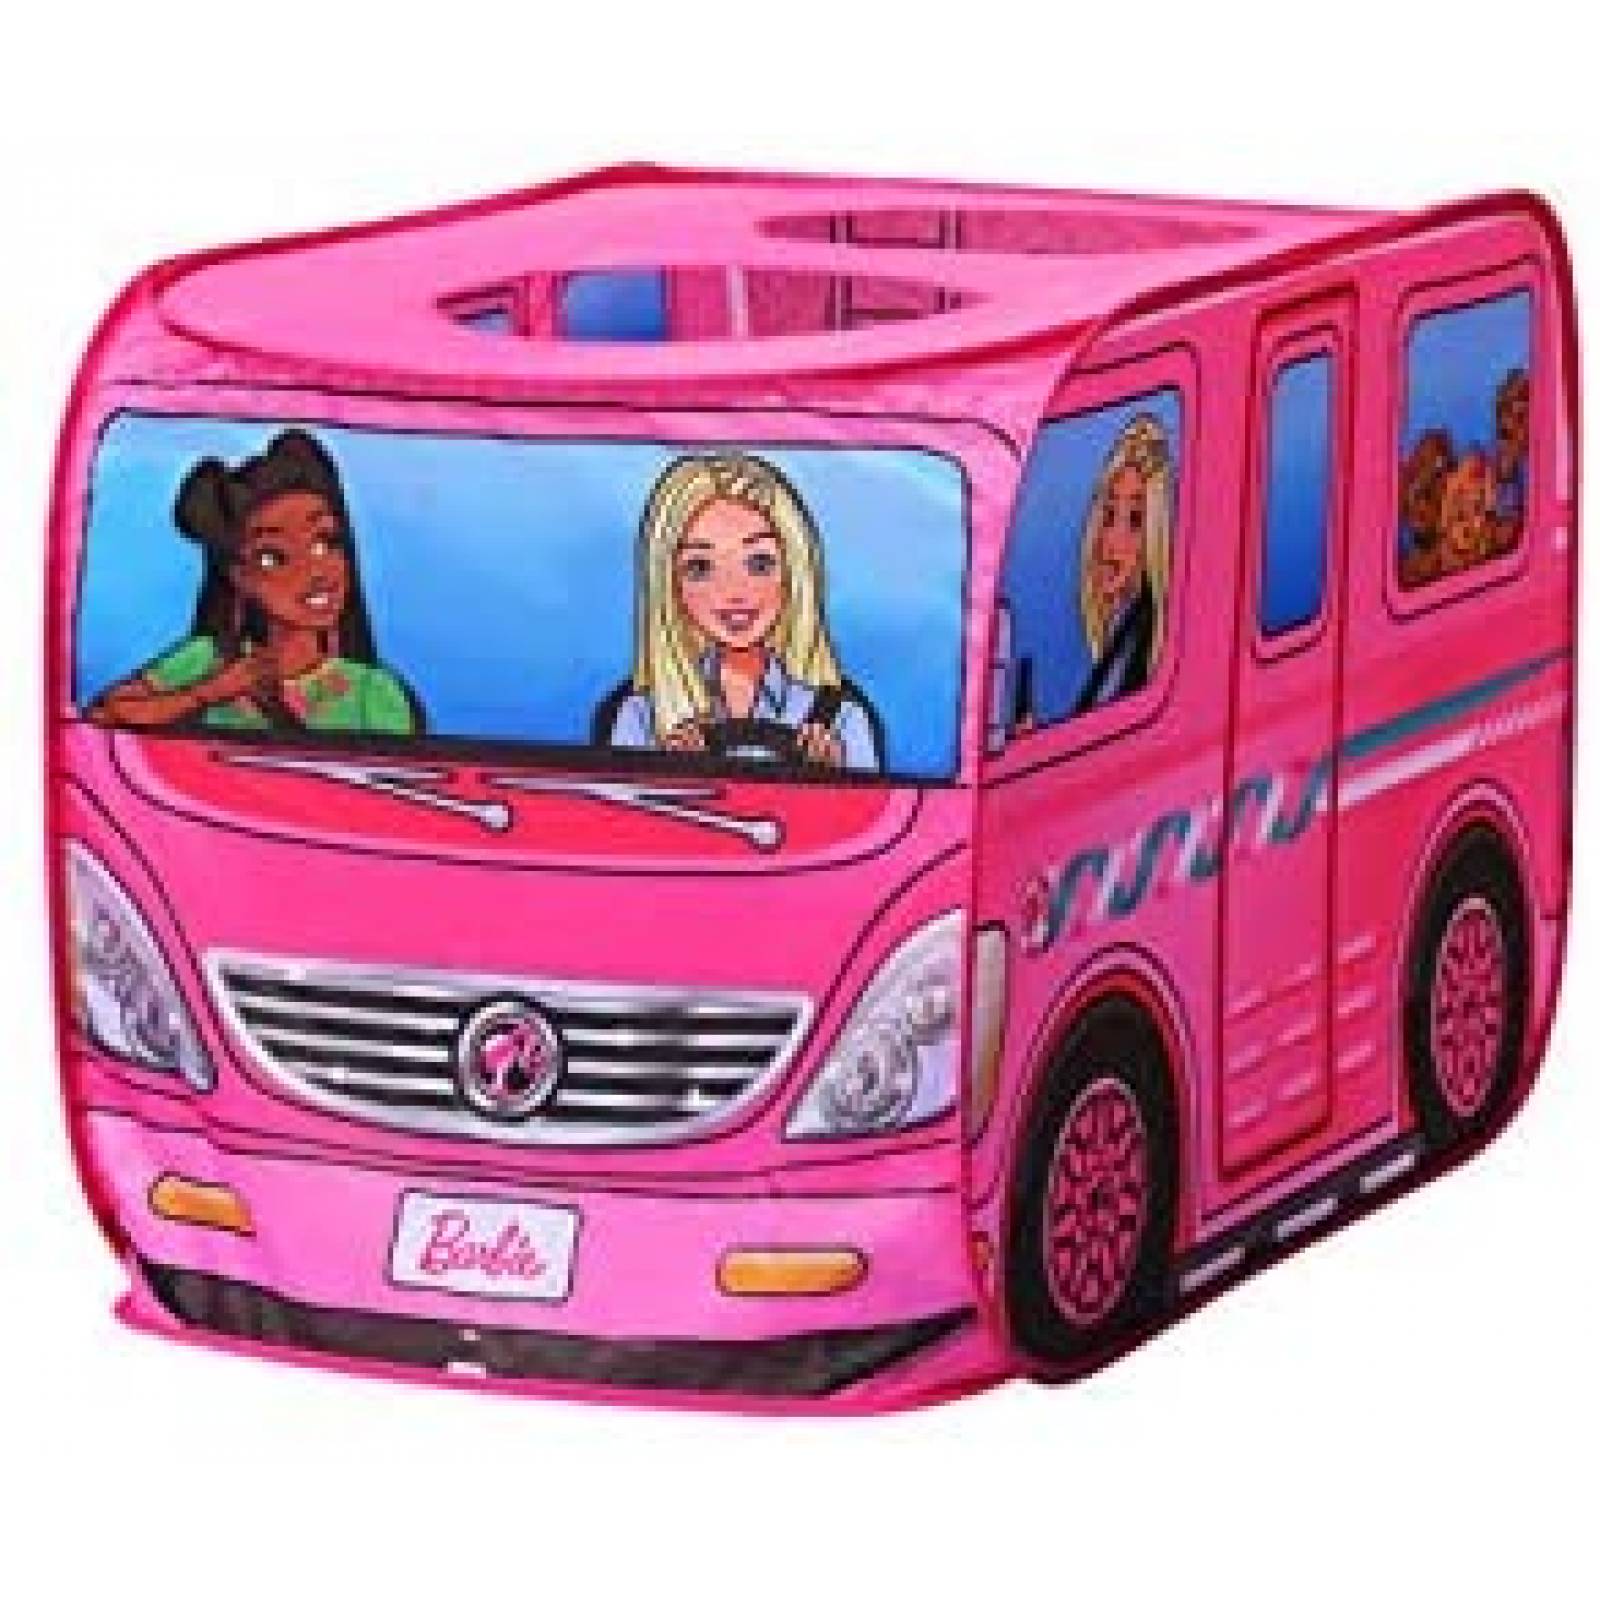 Tienda de Campaña Sunny Days Entertainment Barbie para Niñas